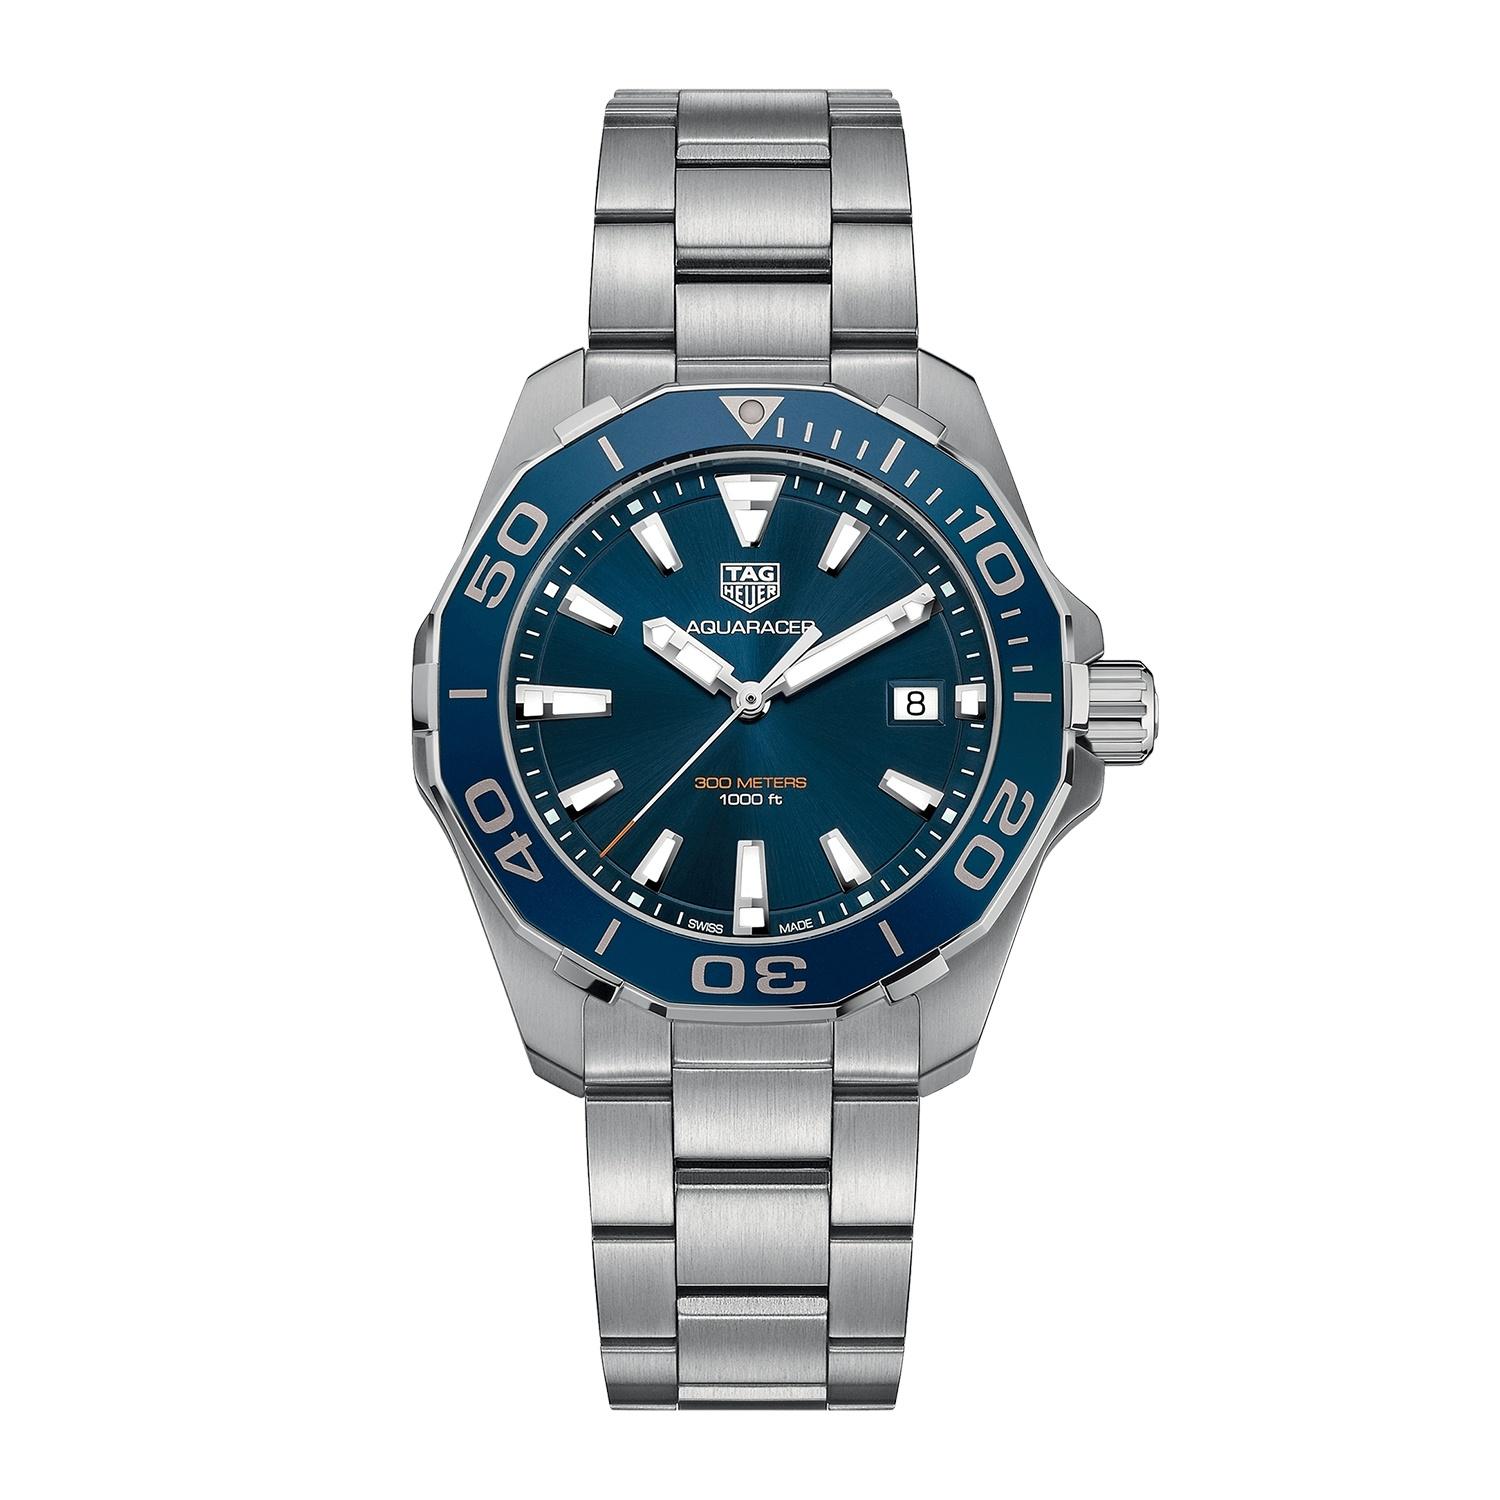 Gents Tag Heuer Aquaracer Timepiece